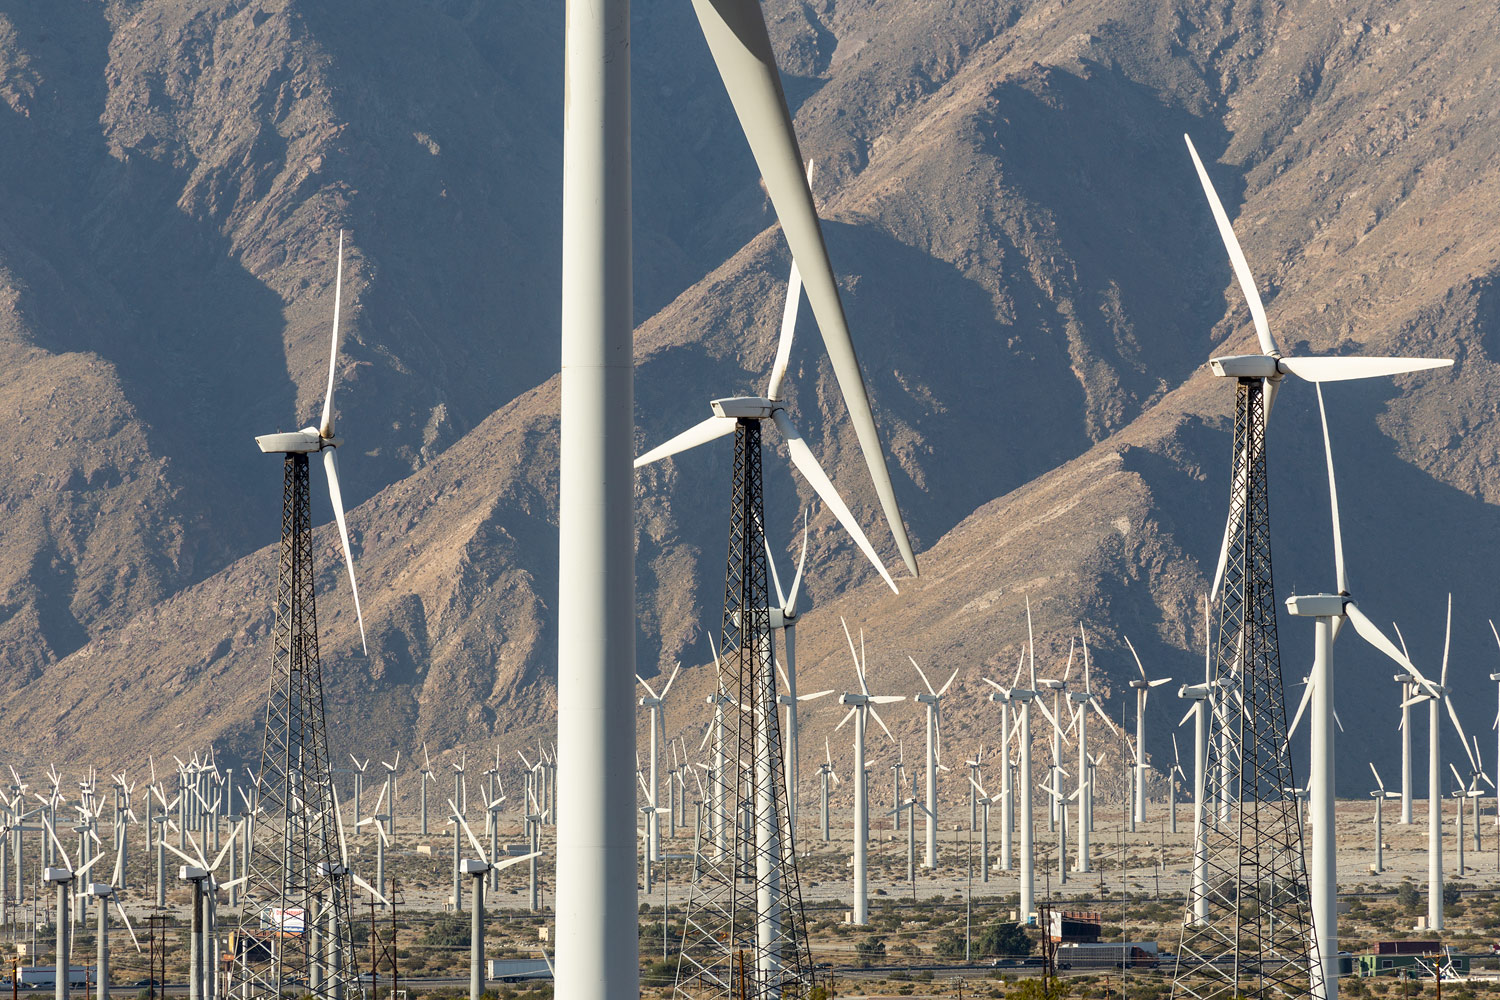  San Gorgonio Pass Wind Farm. Palm Springs, CA. Study #2. 2018 (33°55'28.284" N 116°33'7.5" W)